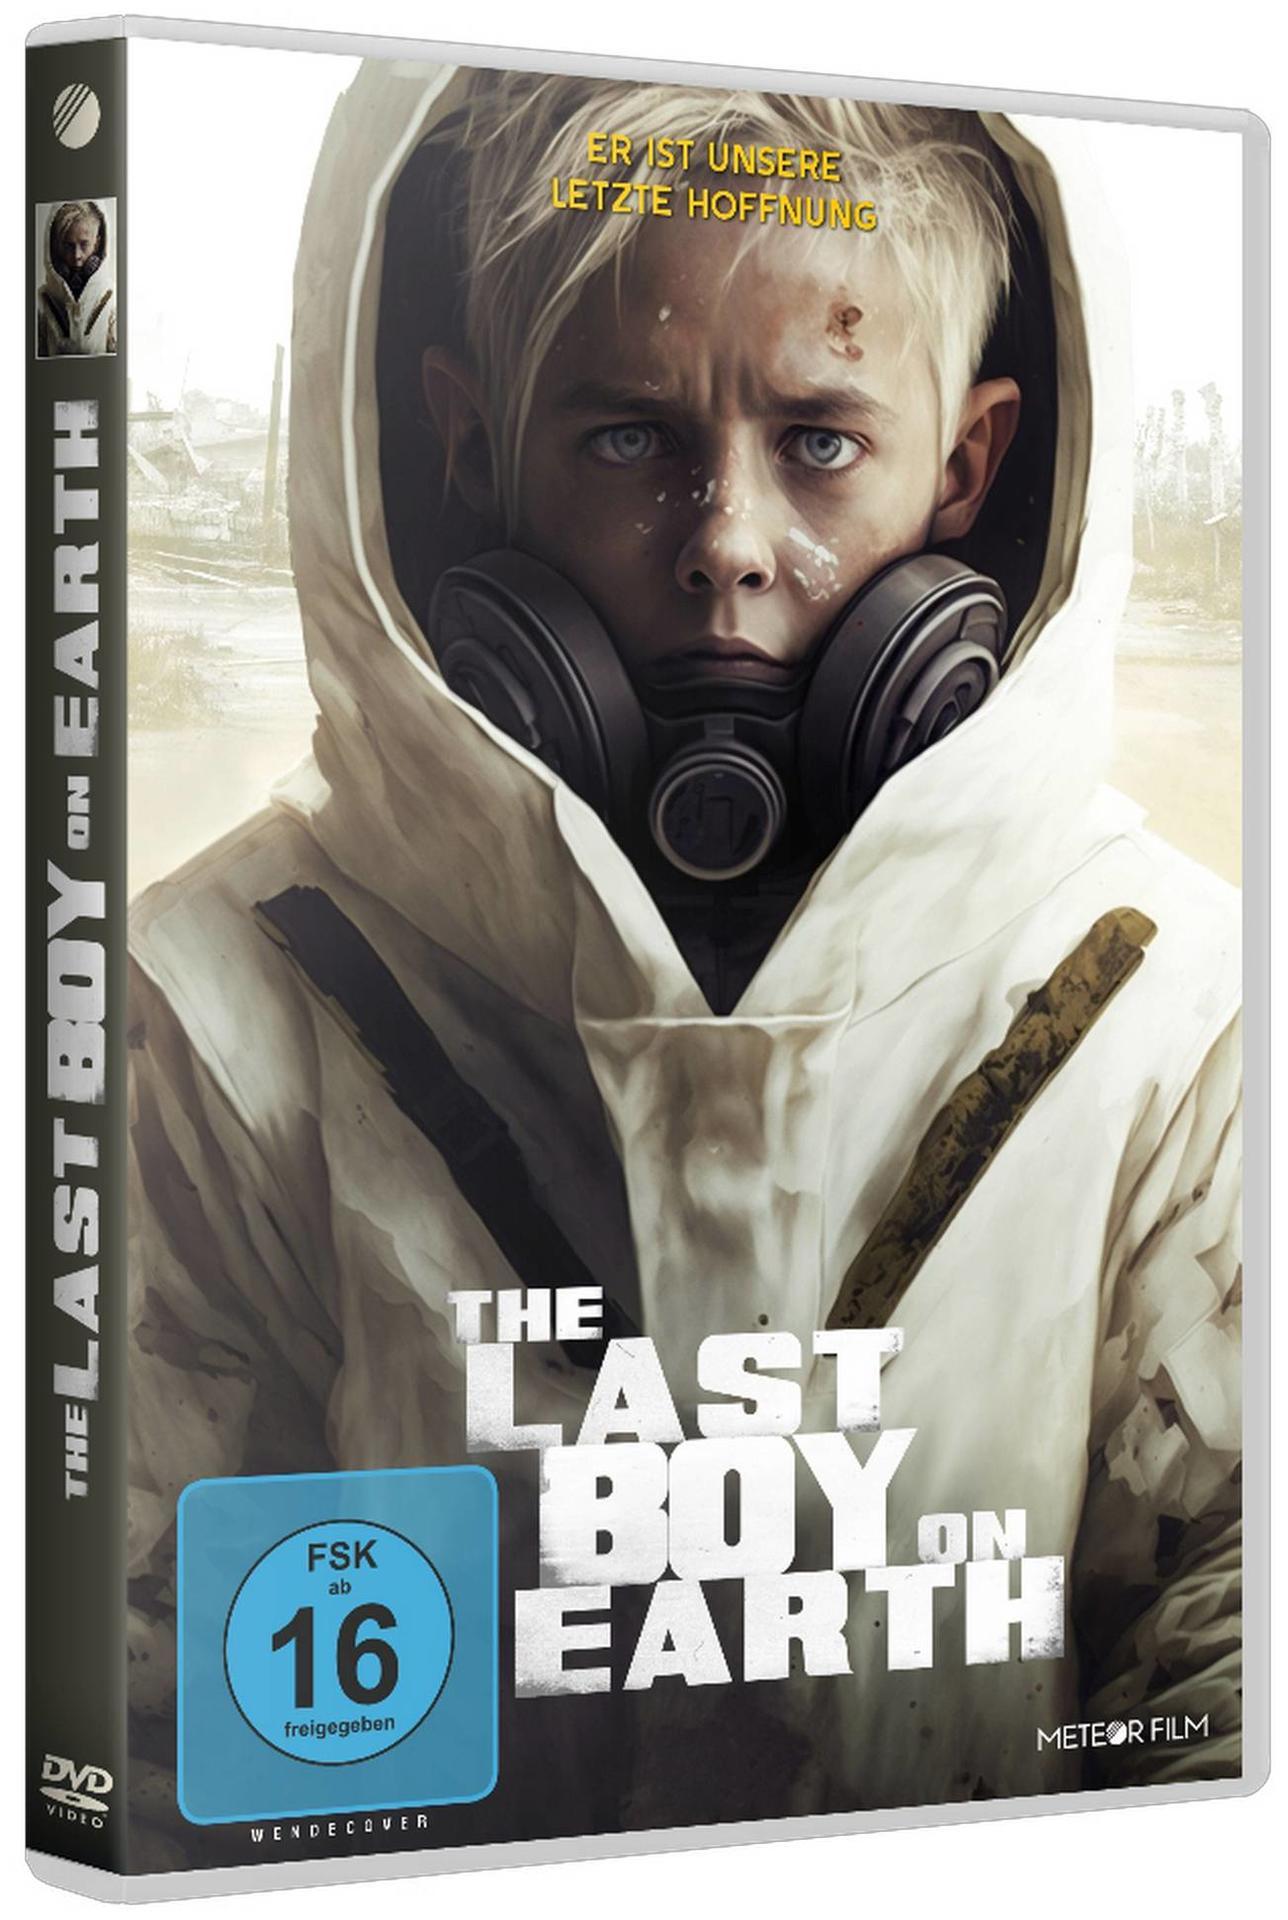 The Last Boy on Earth DVD